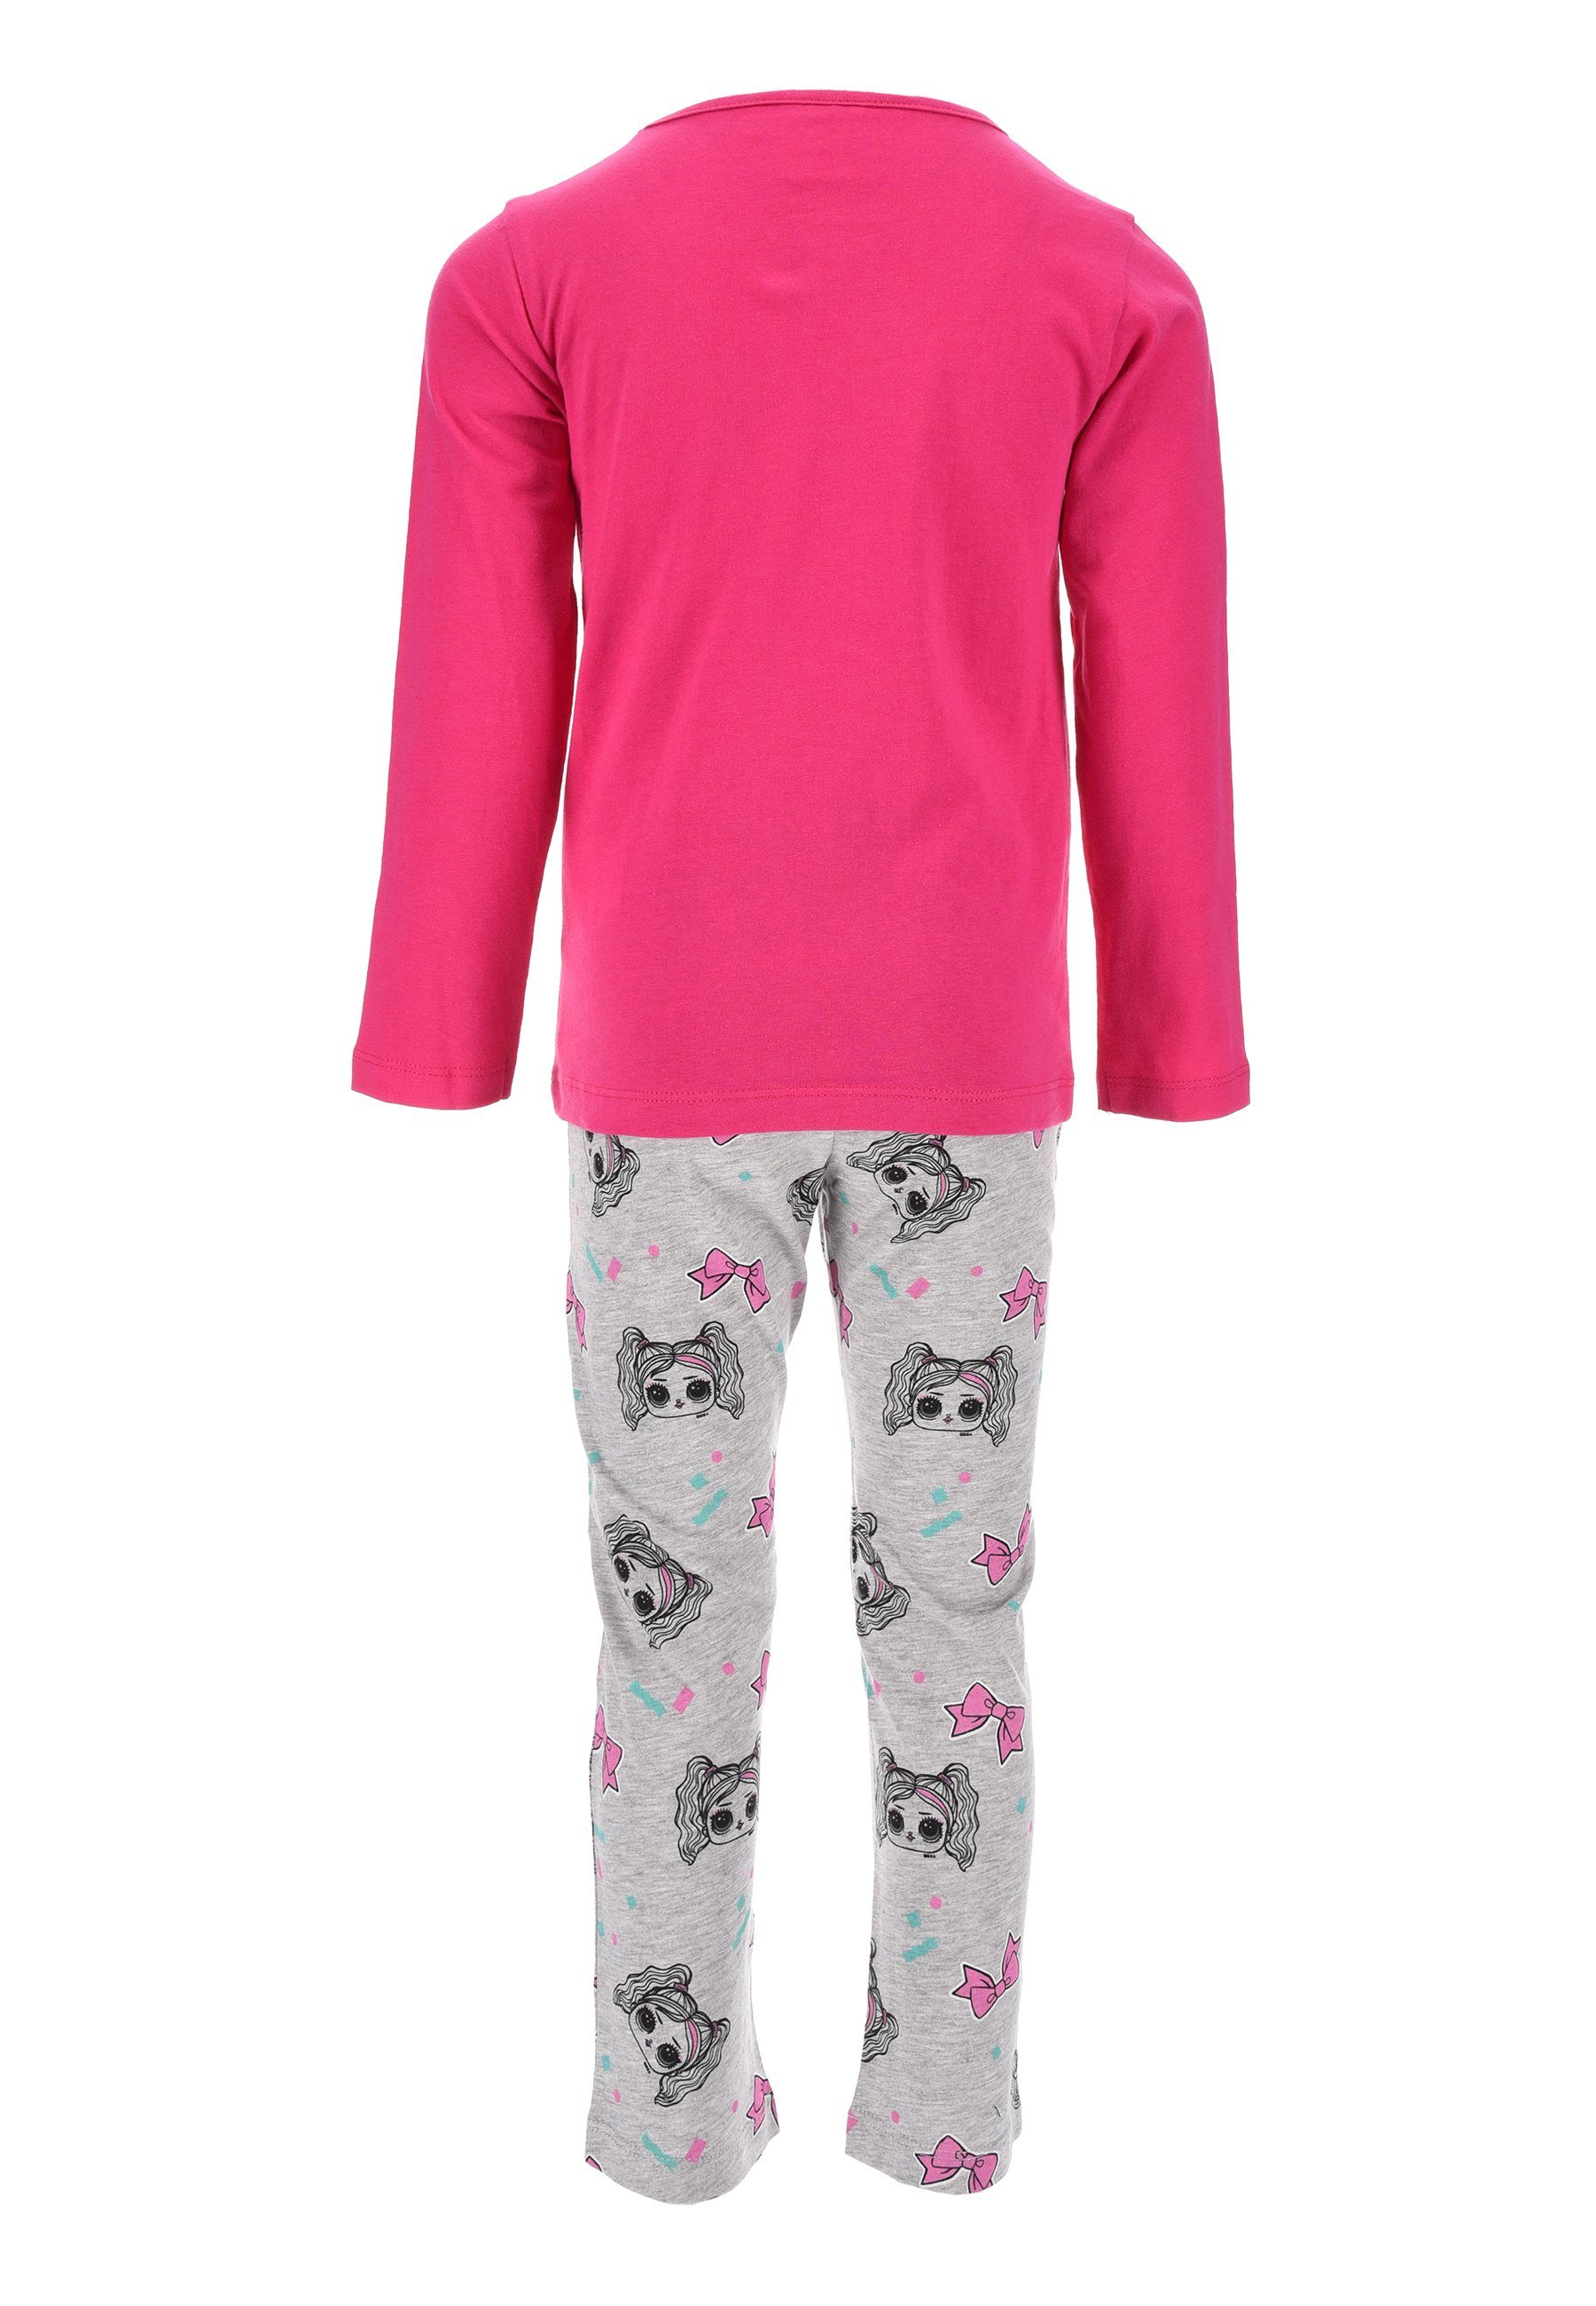 Schlaf-Hose Mädchen Langarm tlg) Shirt Pyjama Schlafanzug Kinder (2 Kinder Schlafanzug + SURPRISE! L.O.L. Pink